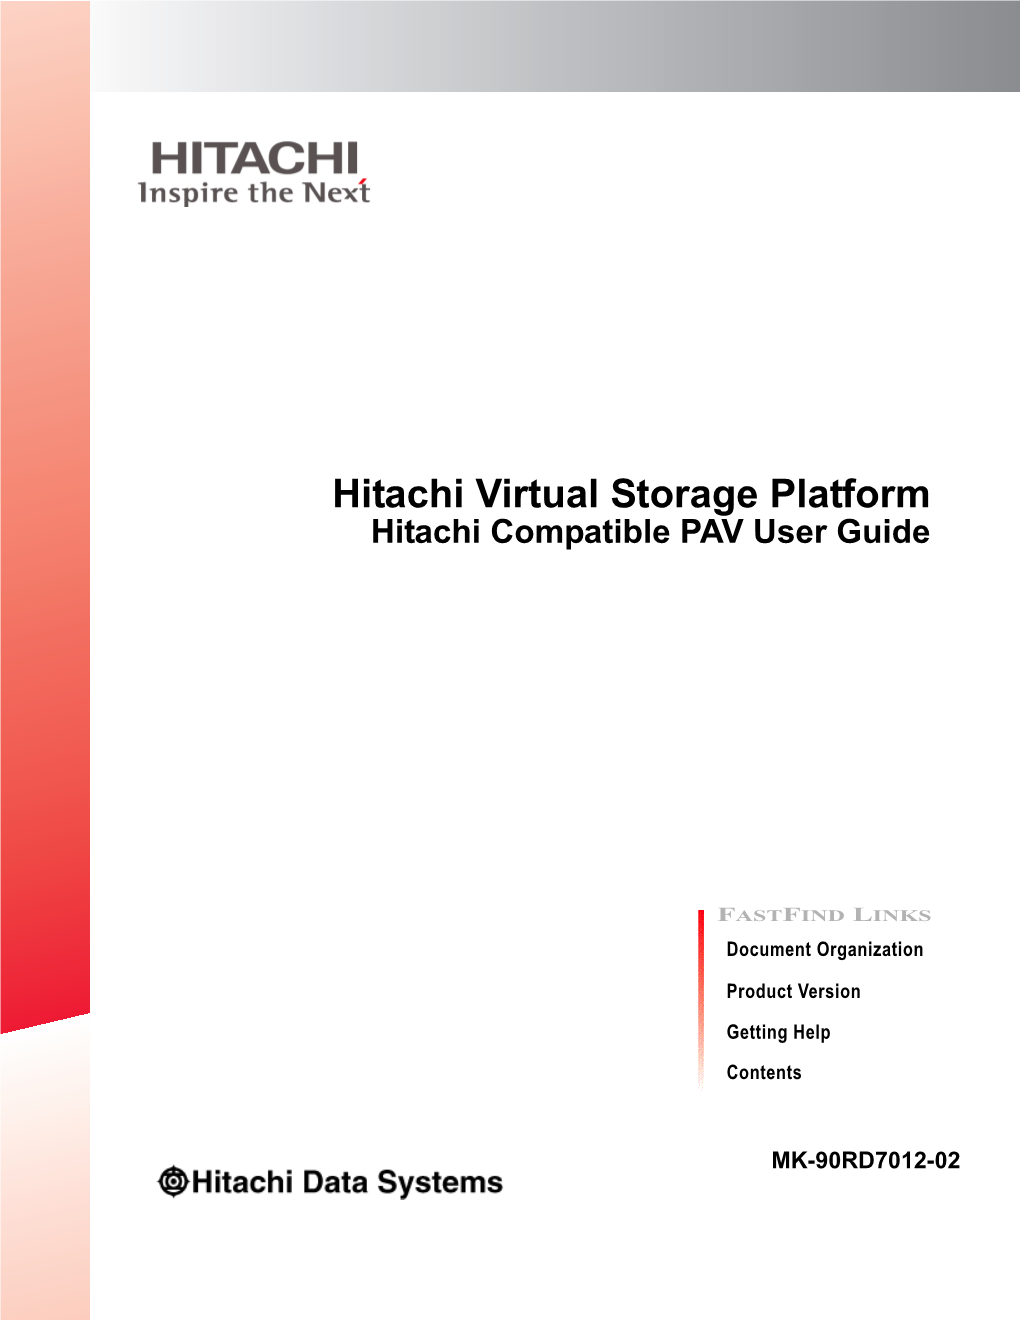 Hitachi Virtual Storage Platform Hitachi Compatible PAV User Guide